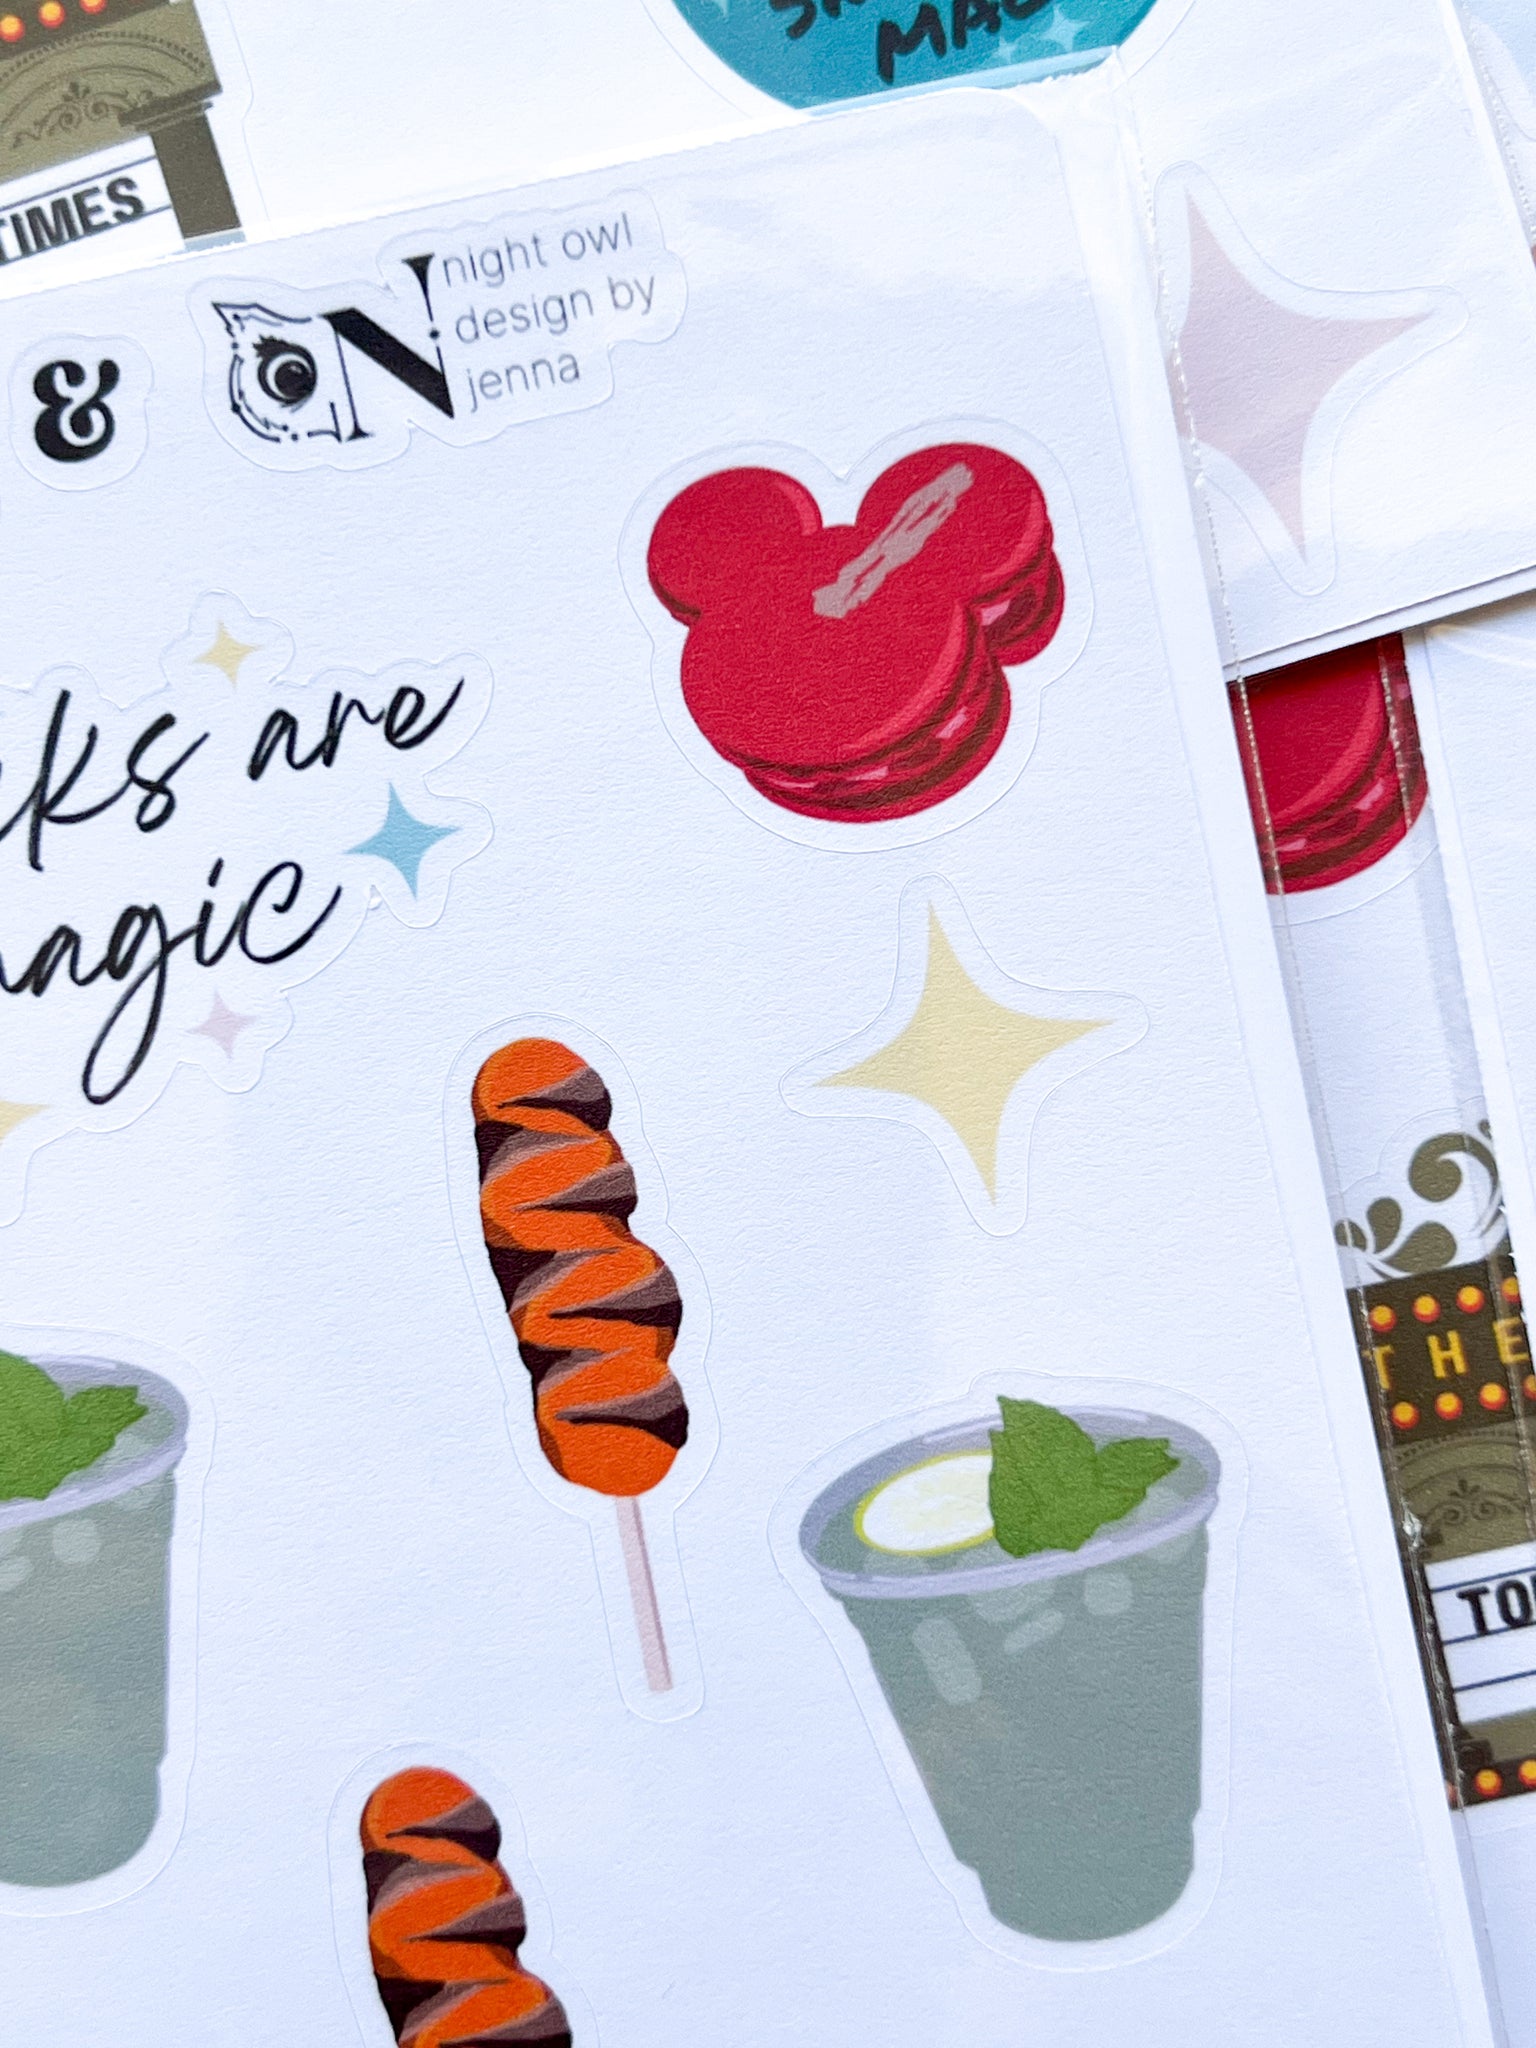 Snacks Are Magic Sticker Sheet